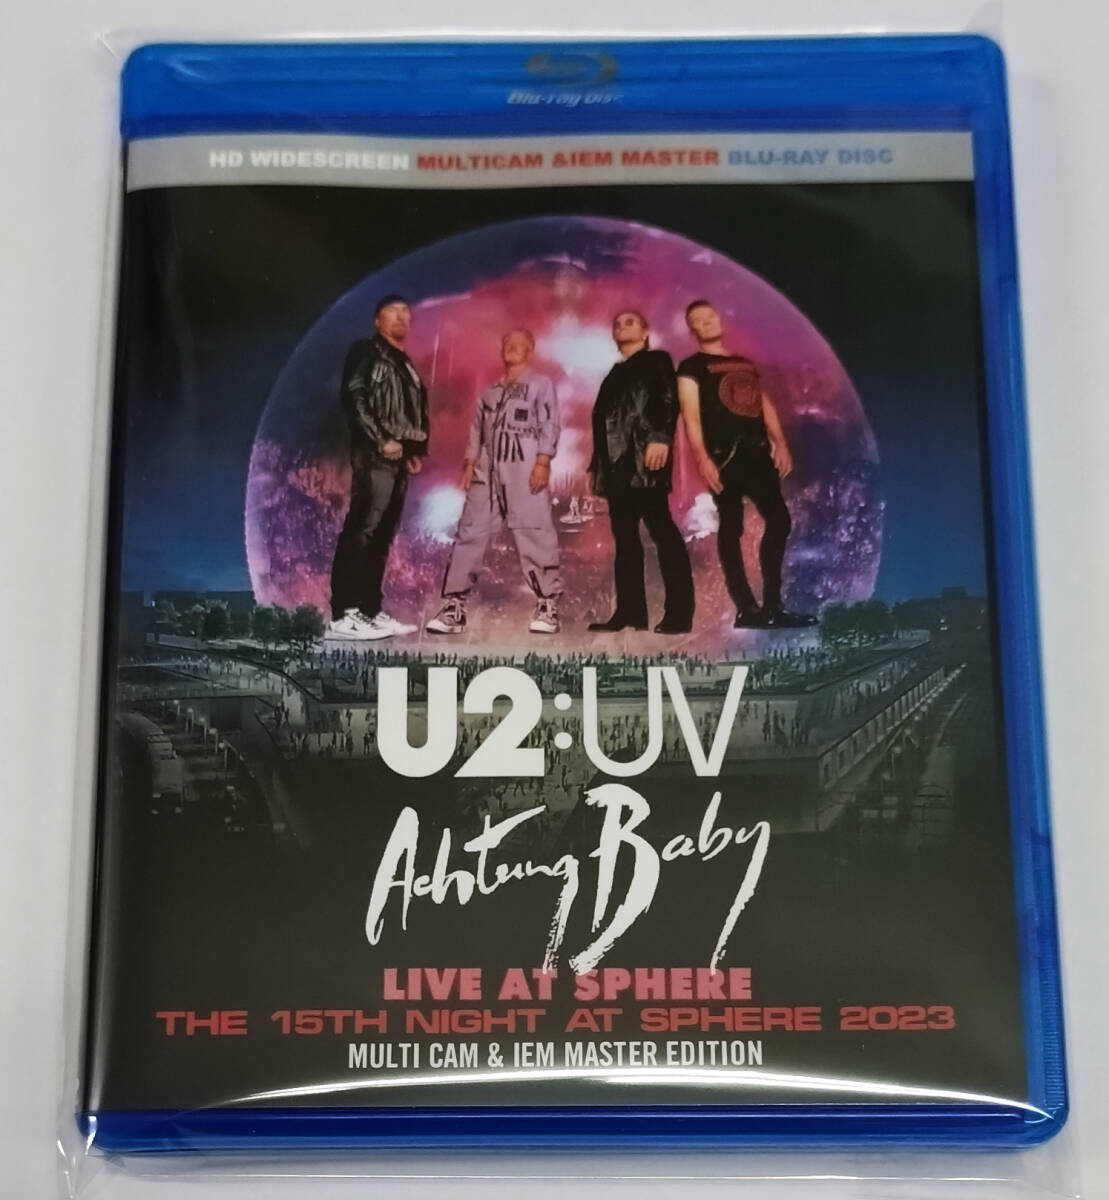 U2 / U2:UV ACHTUNG BABY - THE 15TH NIGHT AT SPHERE 2023 : MULTI CAM & IEM MASTER EDITION (BDR) 　_画像1